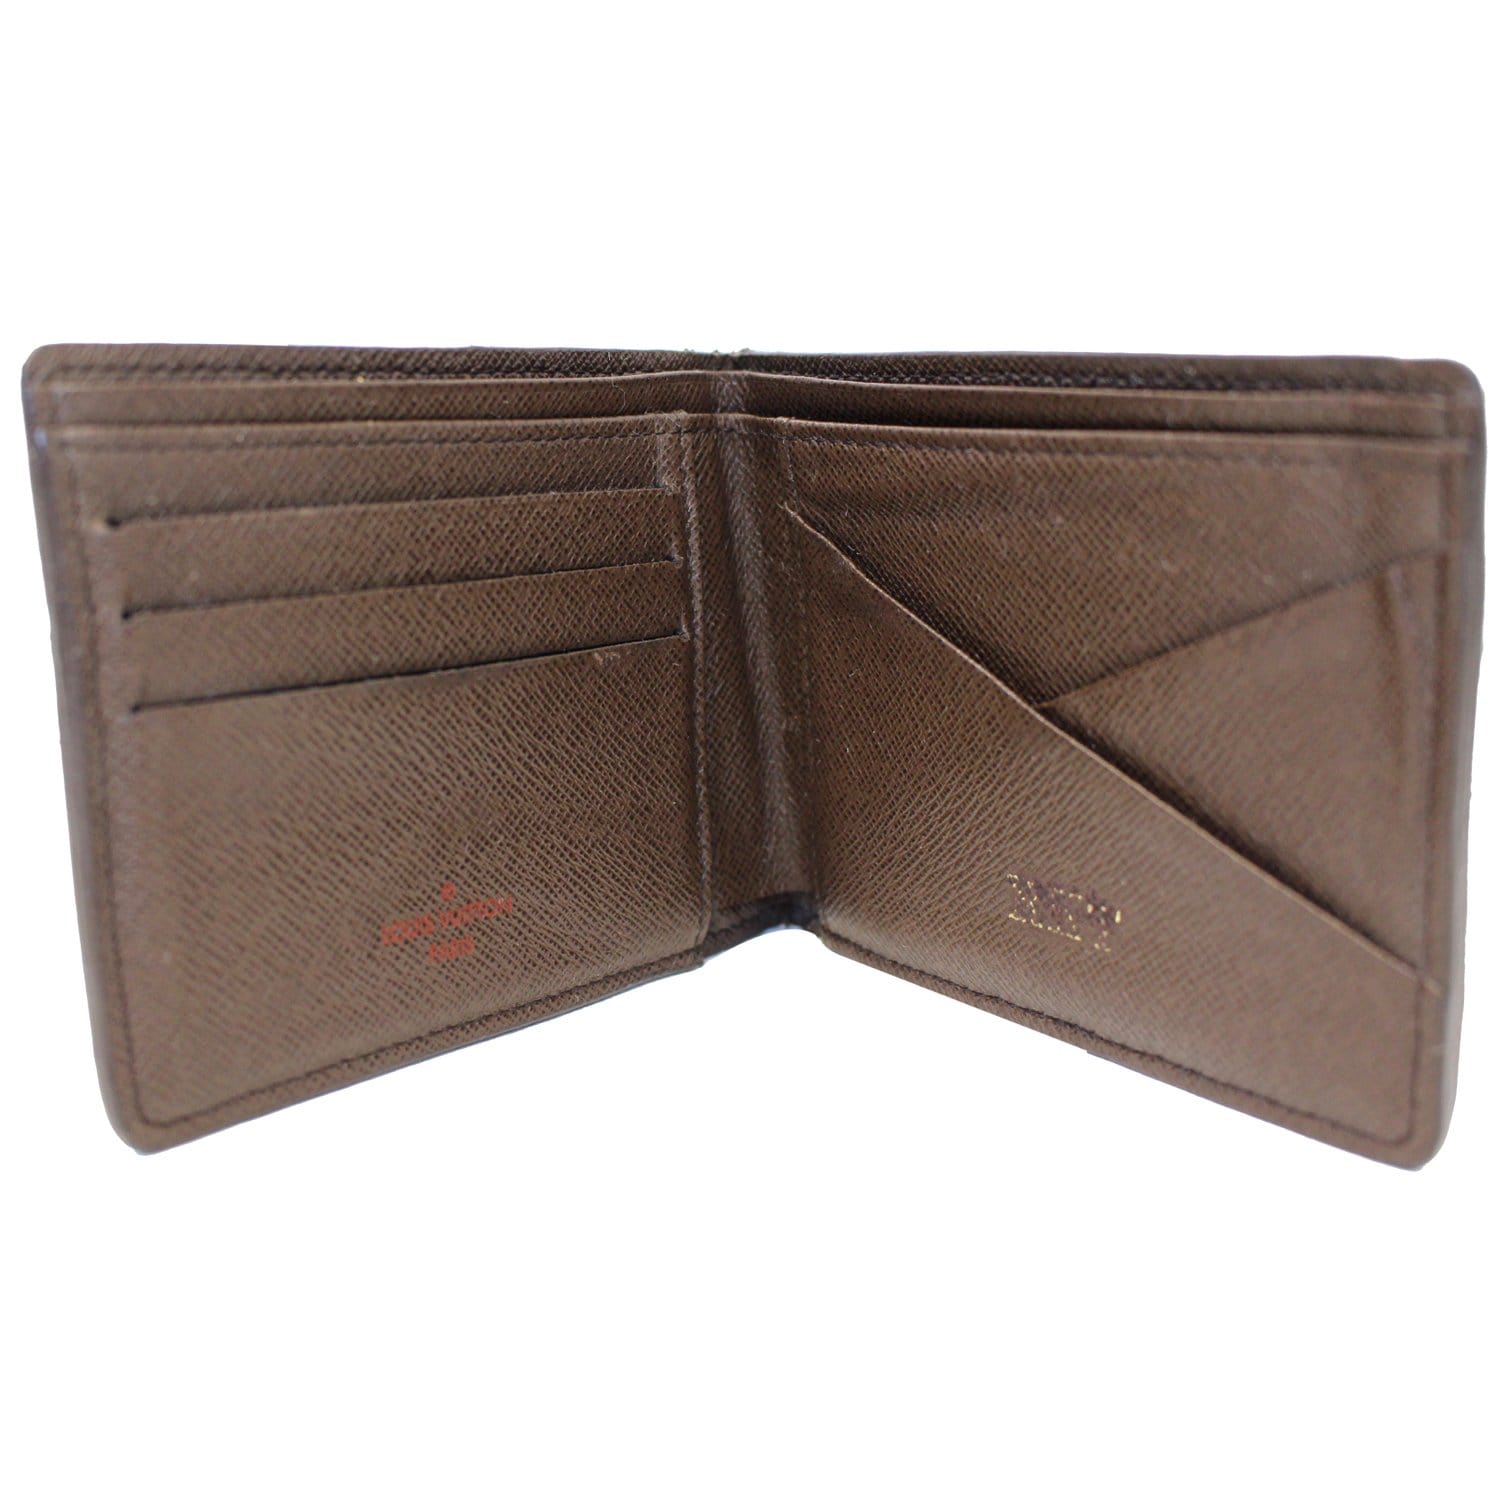 Lv 60017 Wallet mono motif With The Same Damir